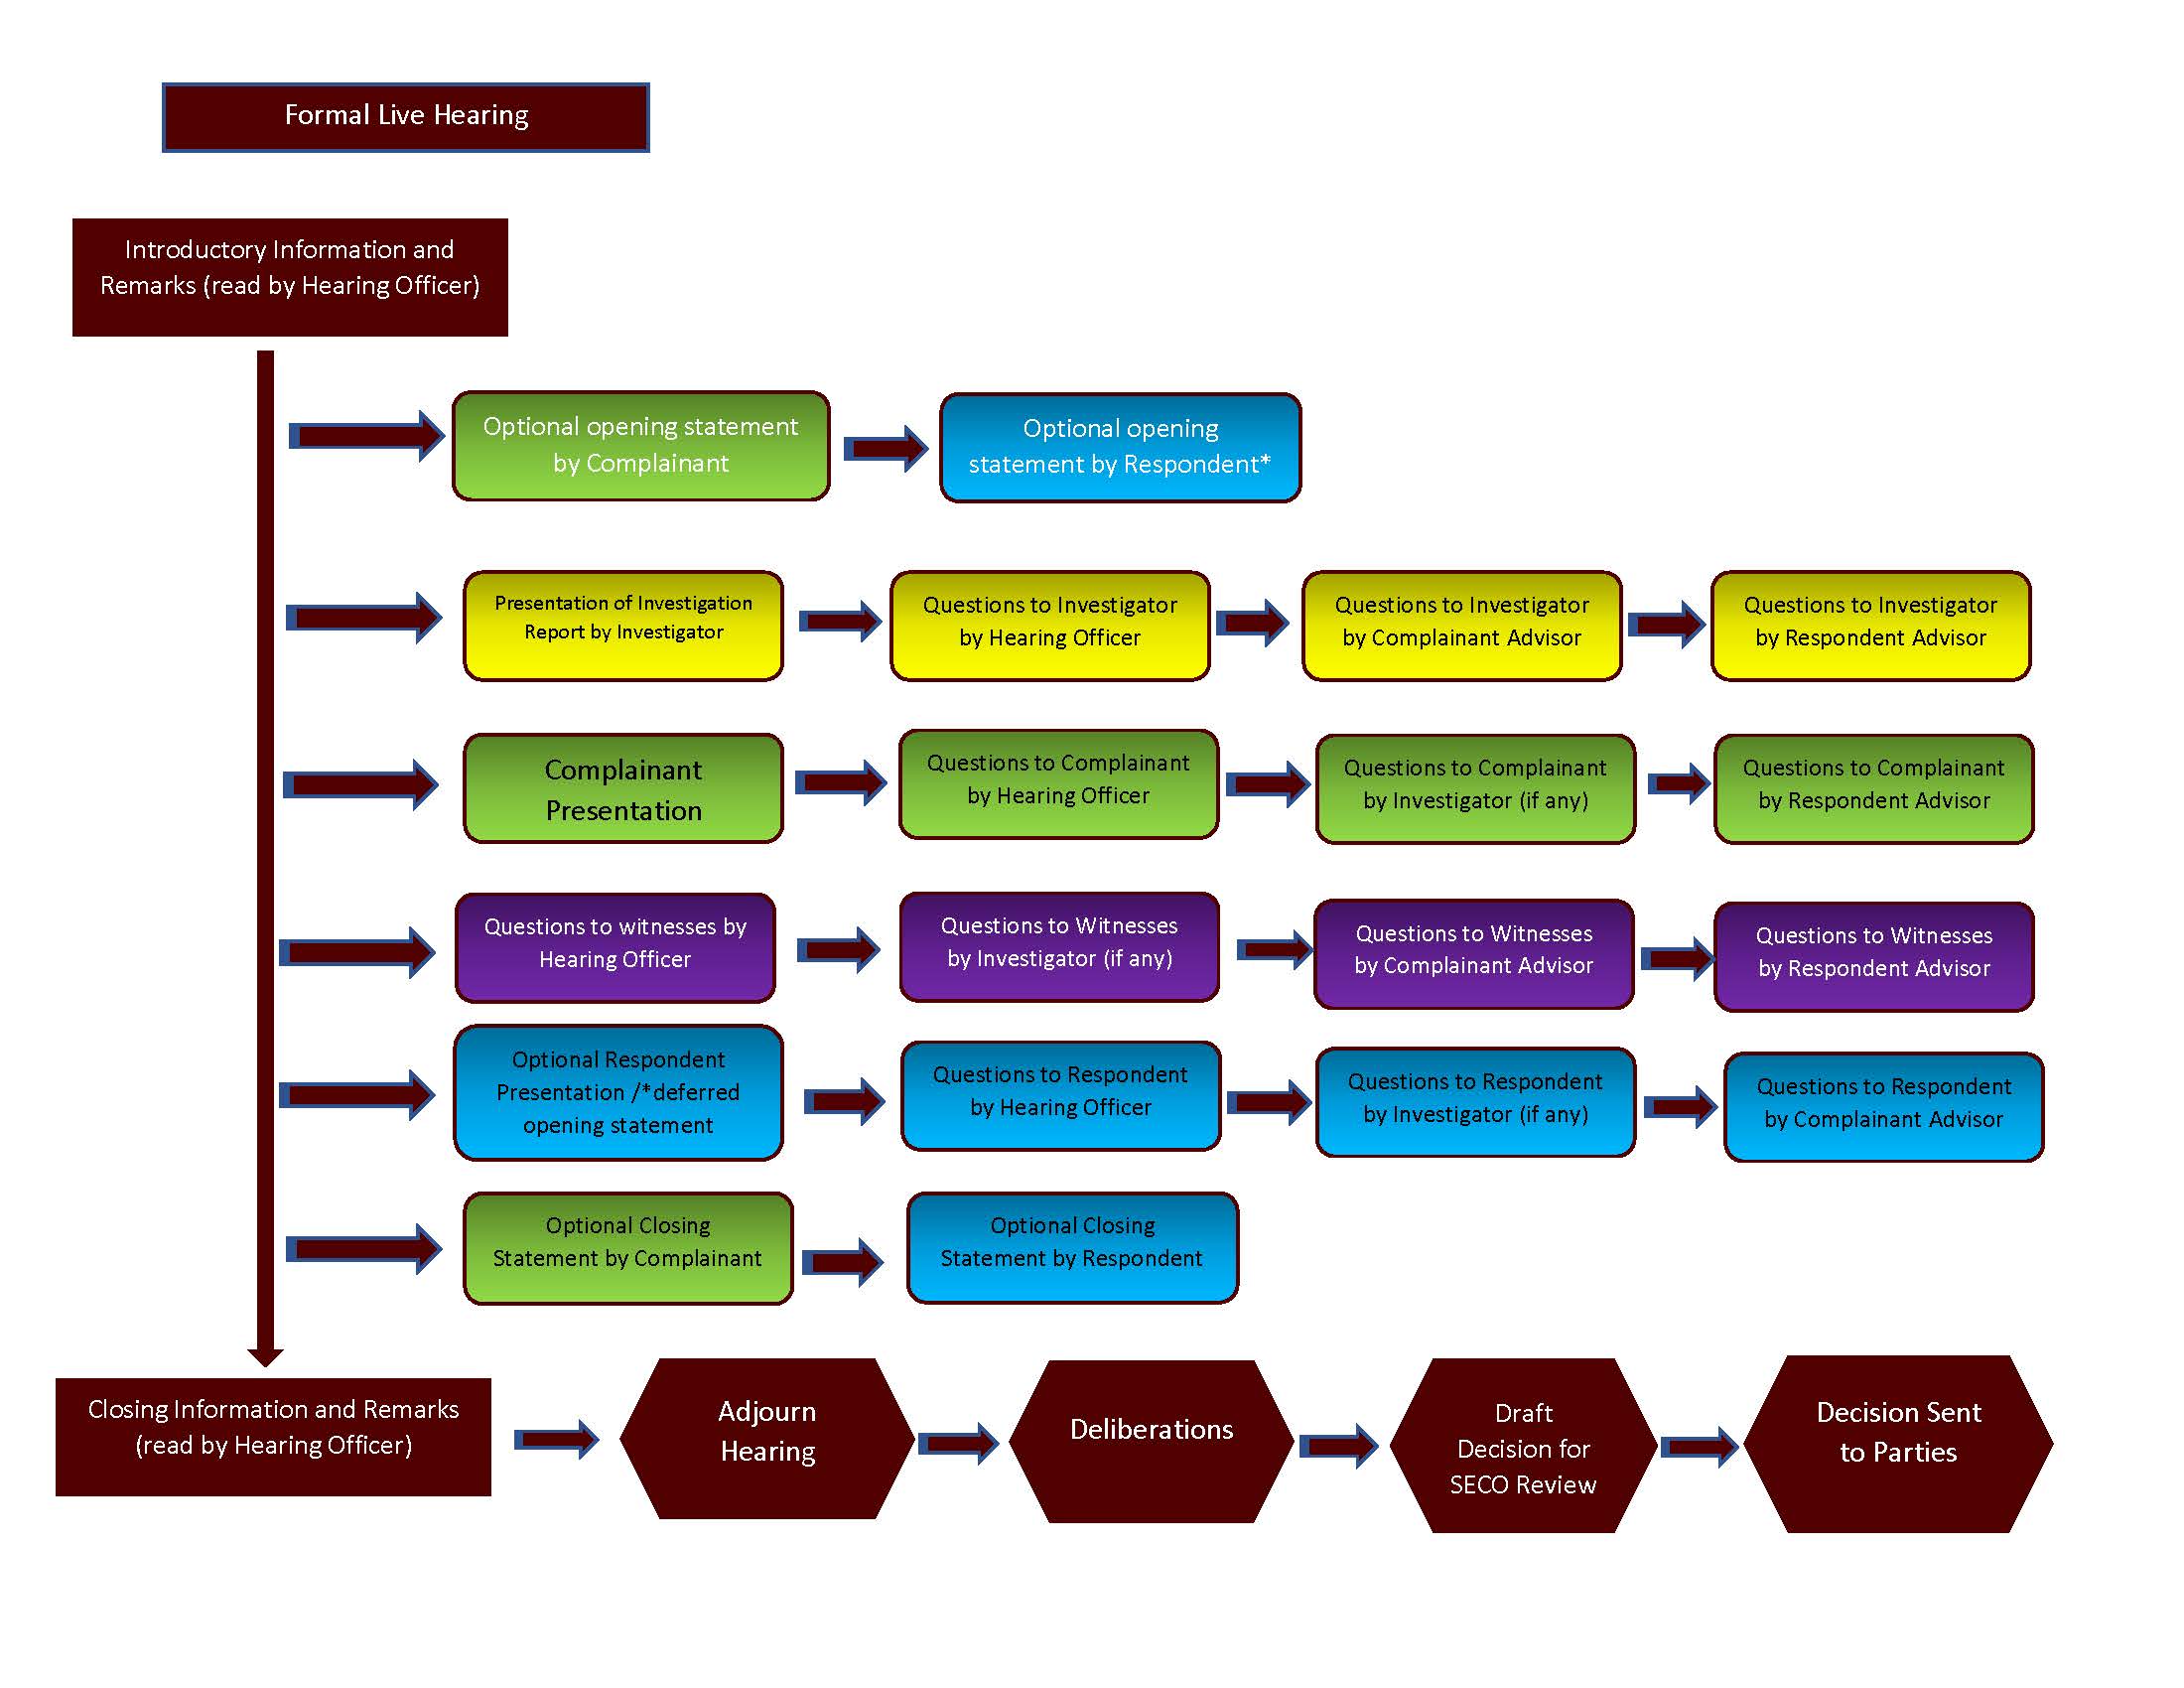 Investigation process flow chart diagram - see outline after image for caption